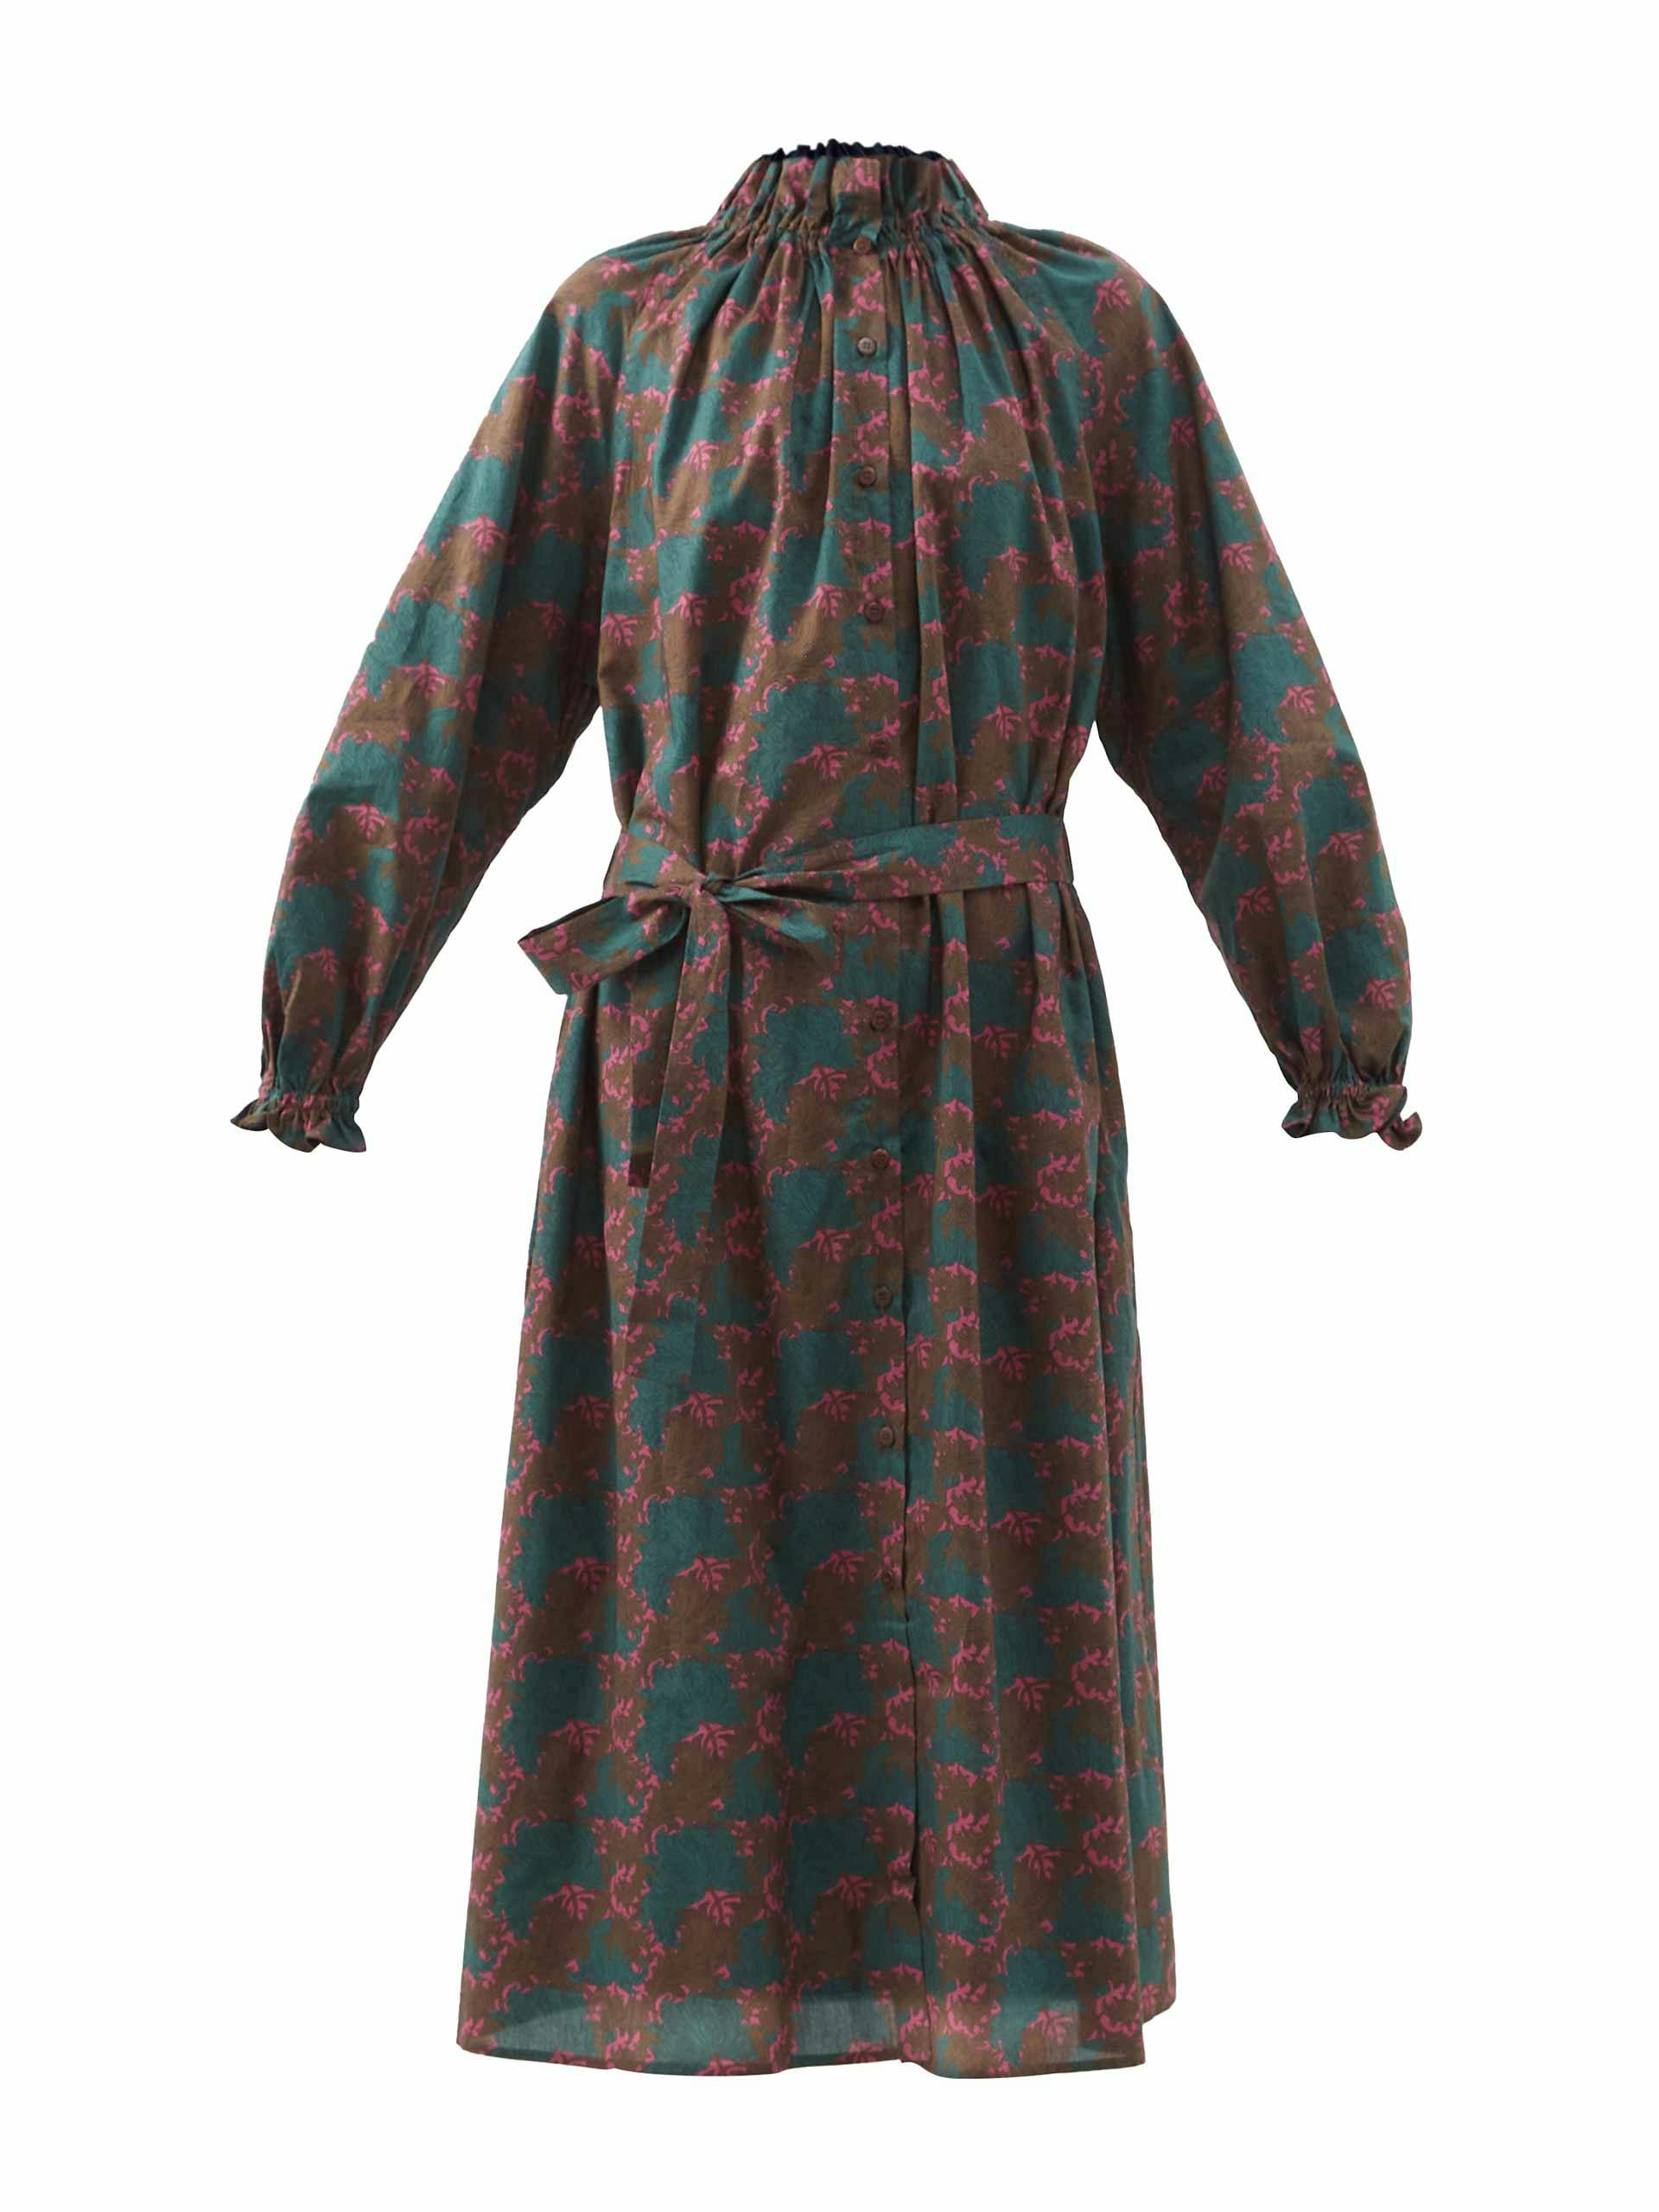 The Haberdasher Tana Lawn Liberty-print dress